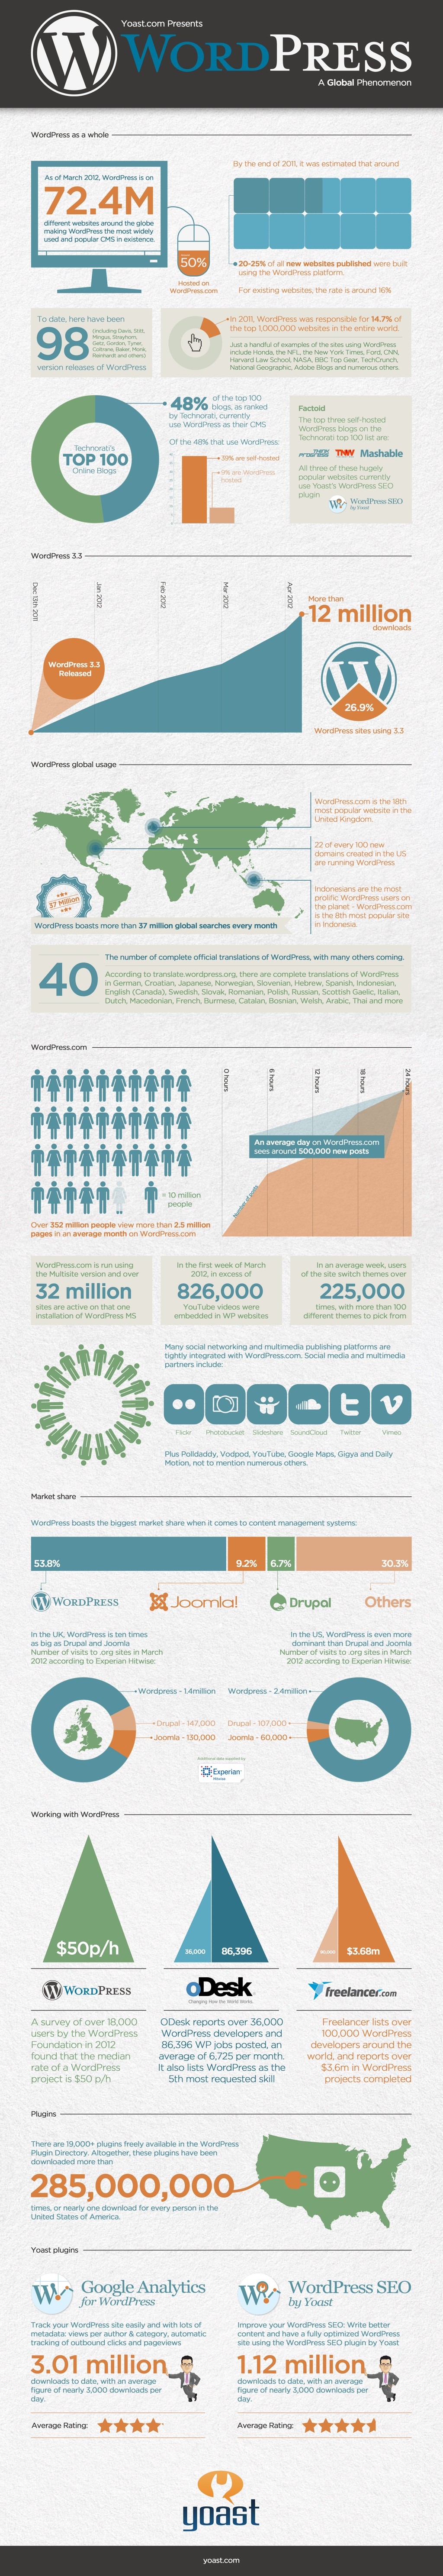 WordPress Statistics Infographic